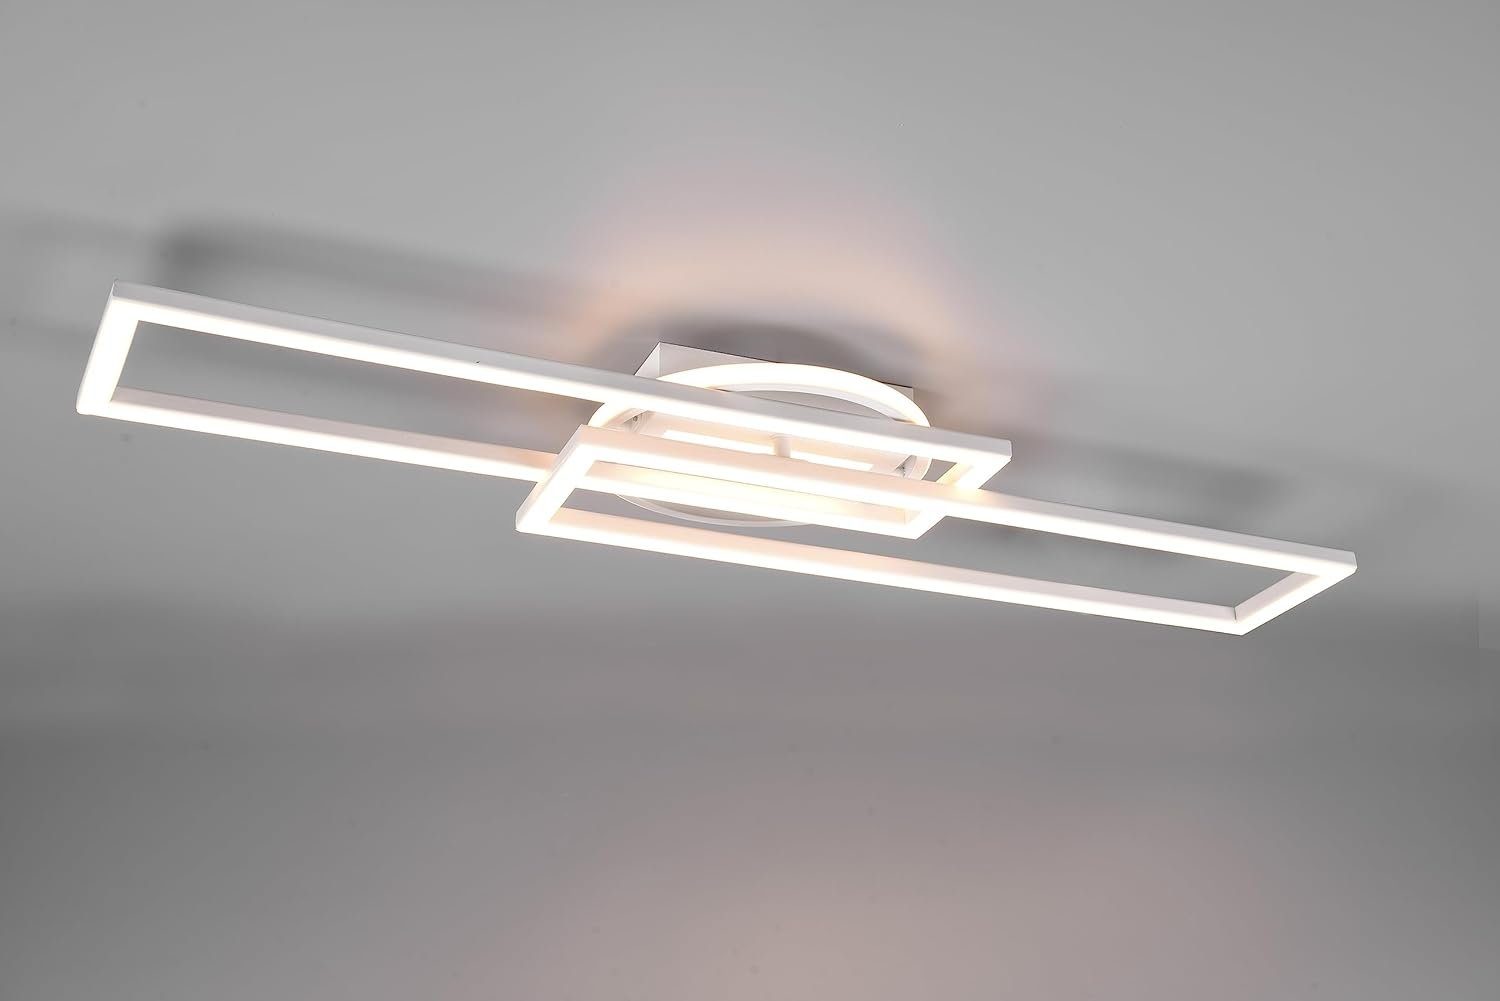 lightling LED Deckenleuchte Alister, LED fest integriert, warmweiß, dimmbar, schwenkbar, Lichtelemente individuell einstellbar